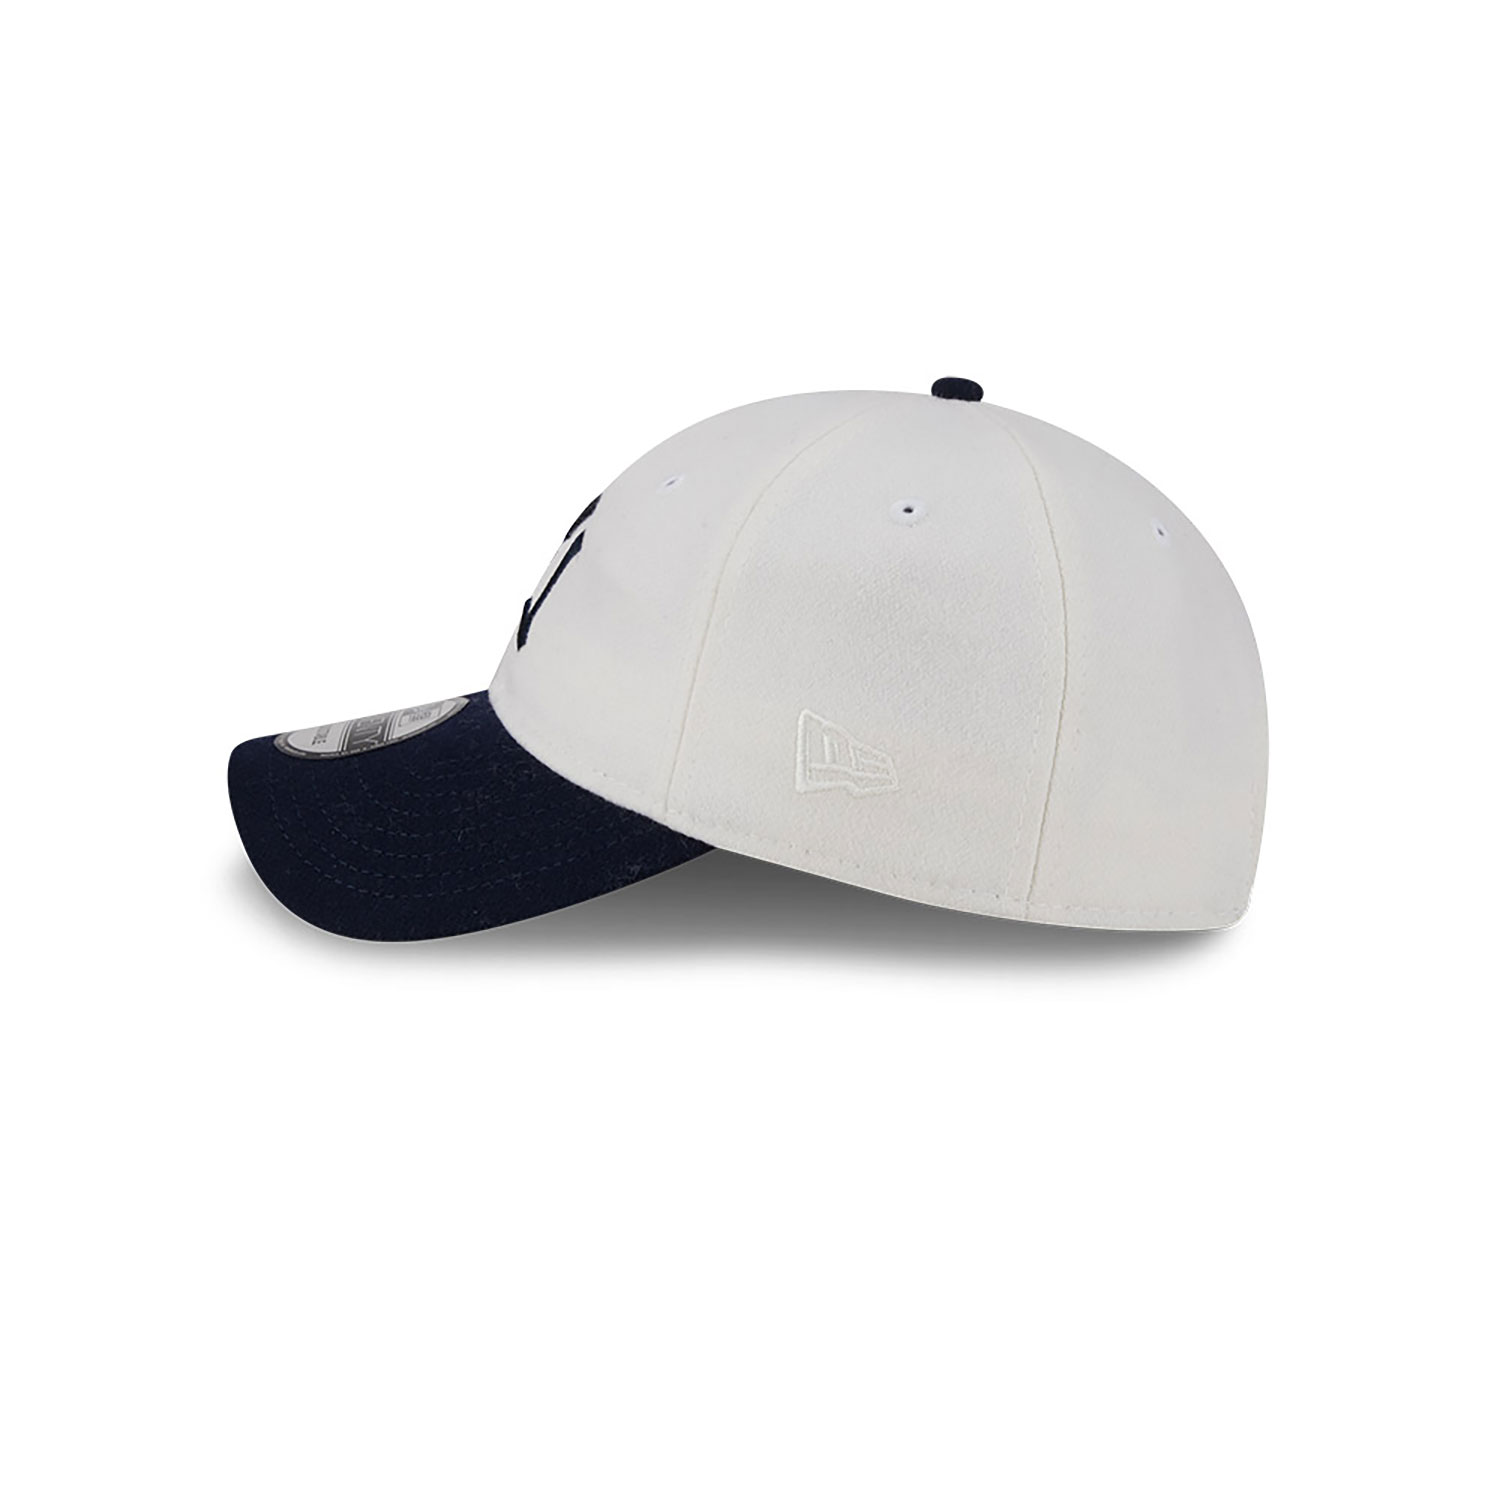 New York Yankees Leather Strap Chrome White 9TWENTY Adjustable Cap